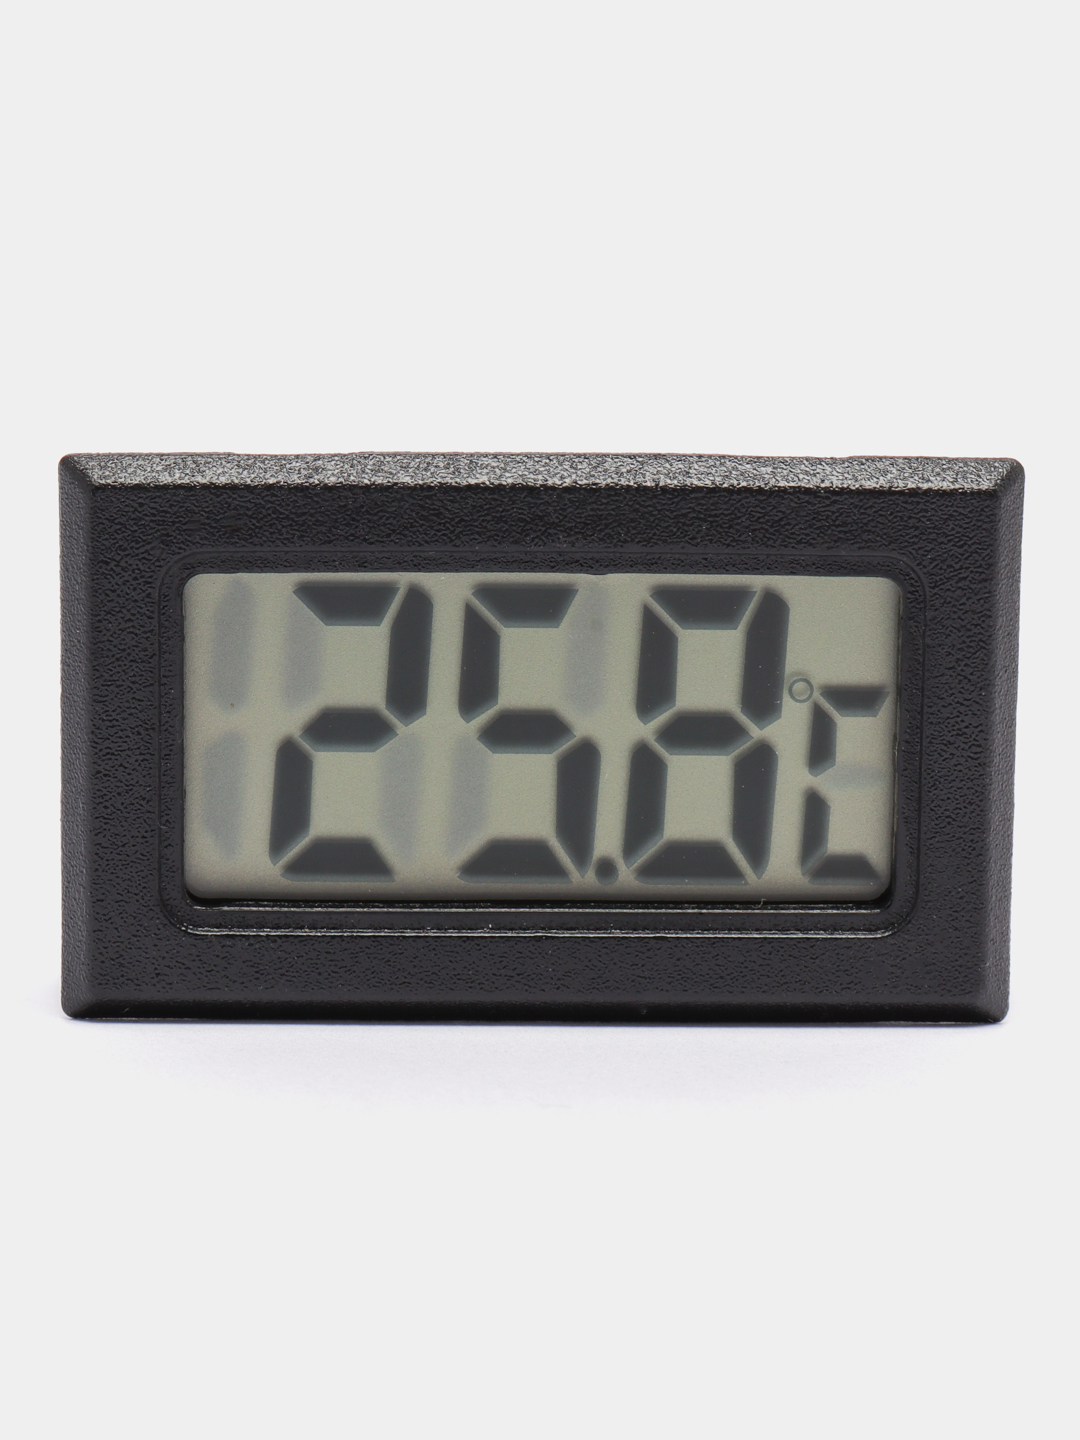 ЗАМЕР-1 электронный термометр (-30..+120 °С)